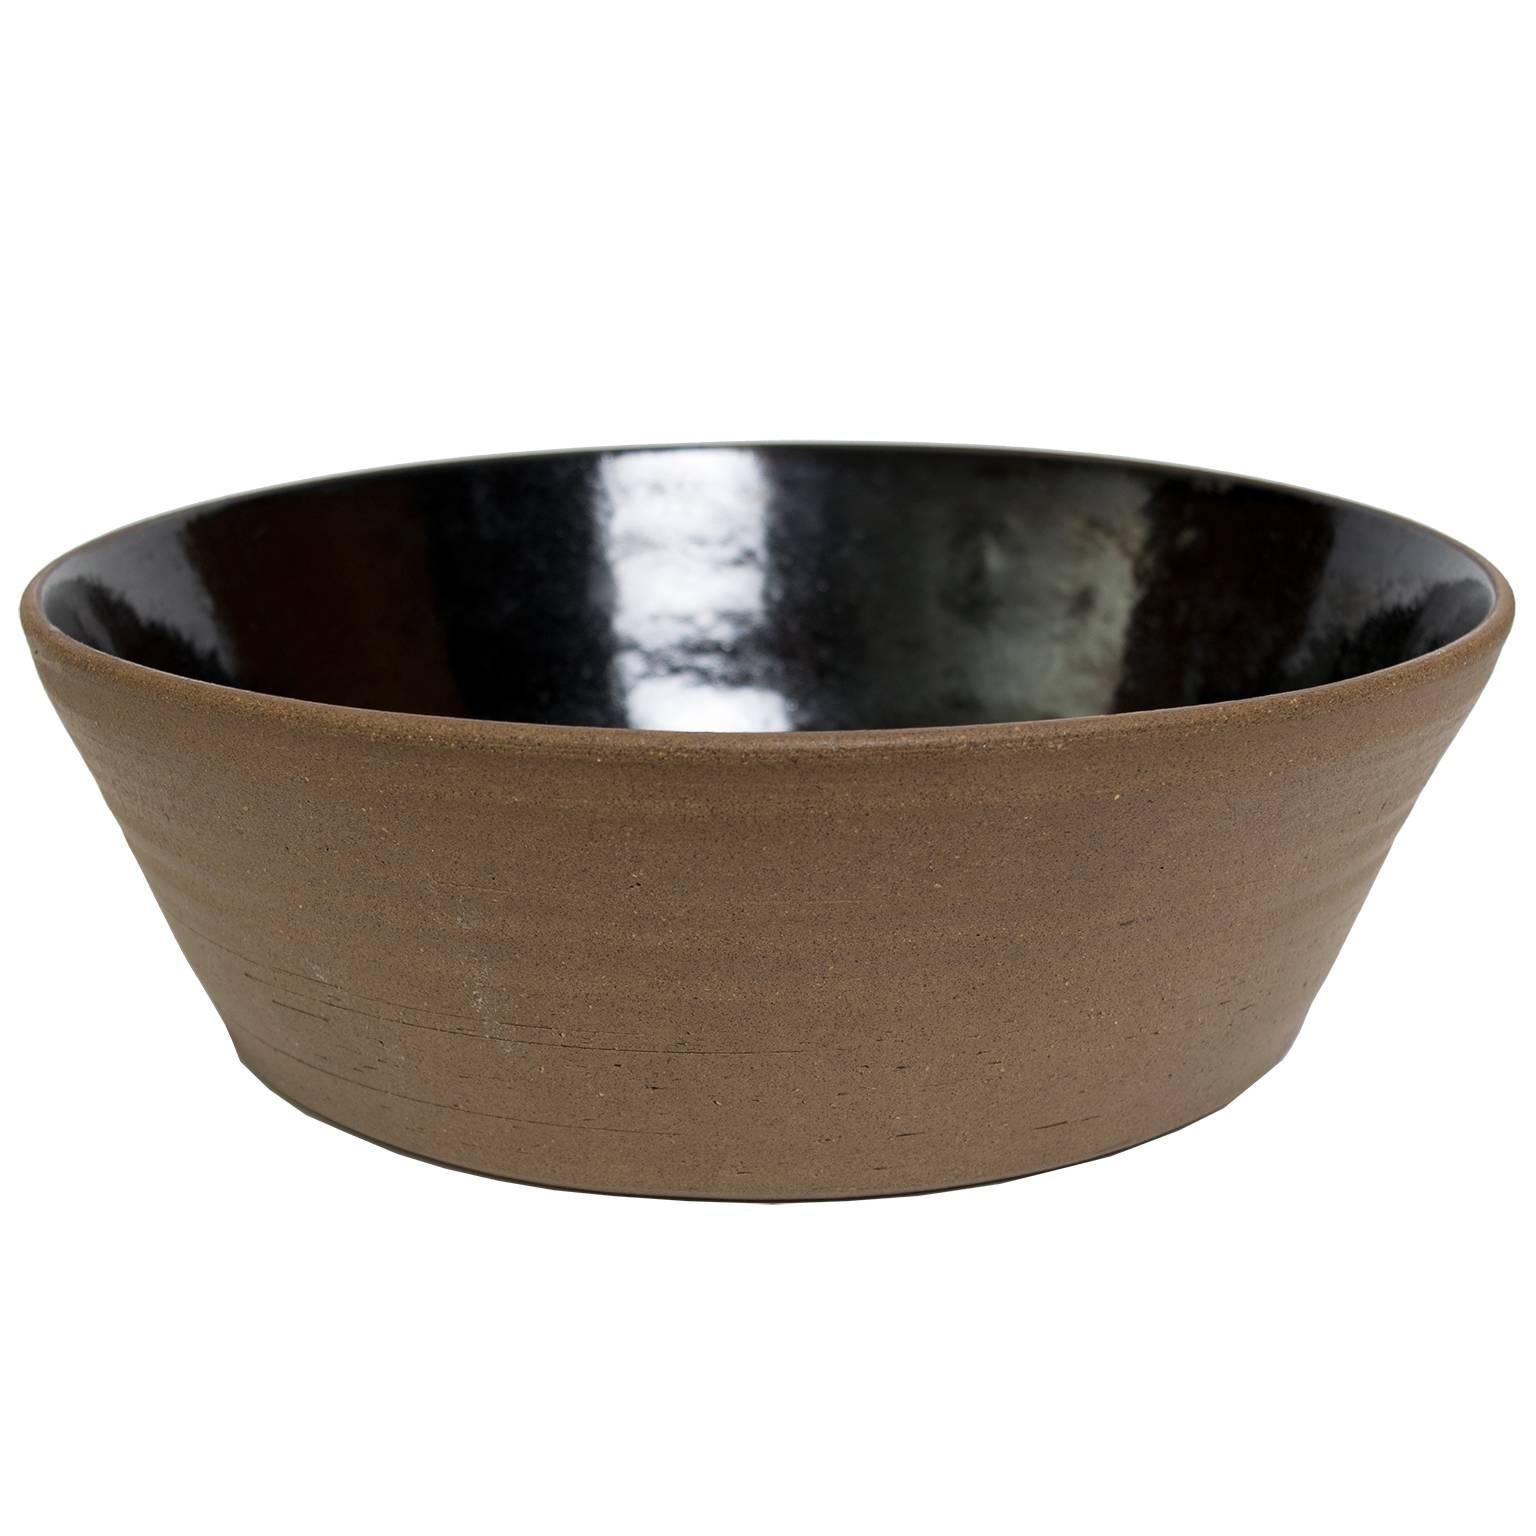 Scandinavian Modern Ceramic Bowl by Signe Persson-Melin